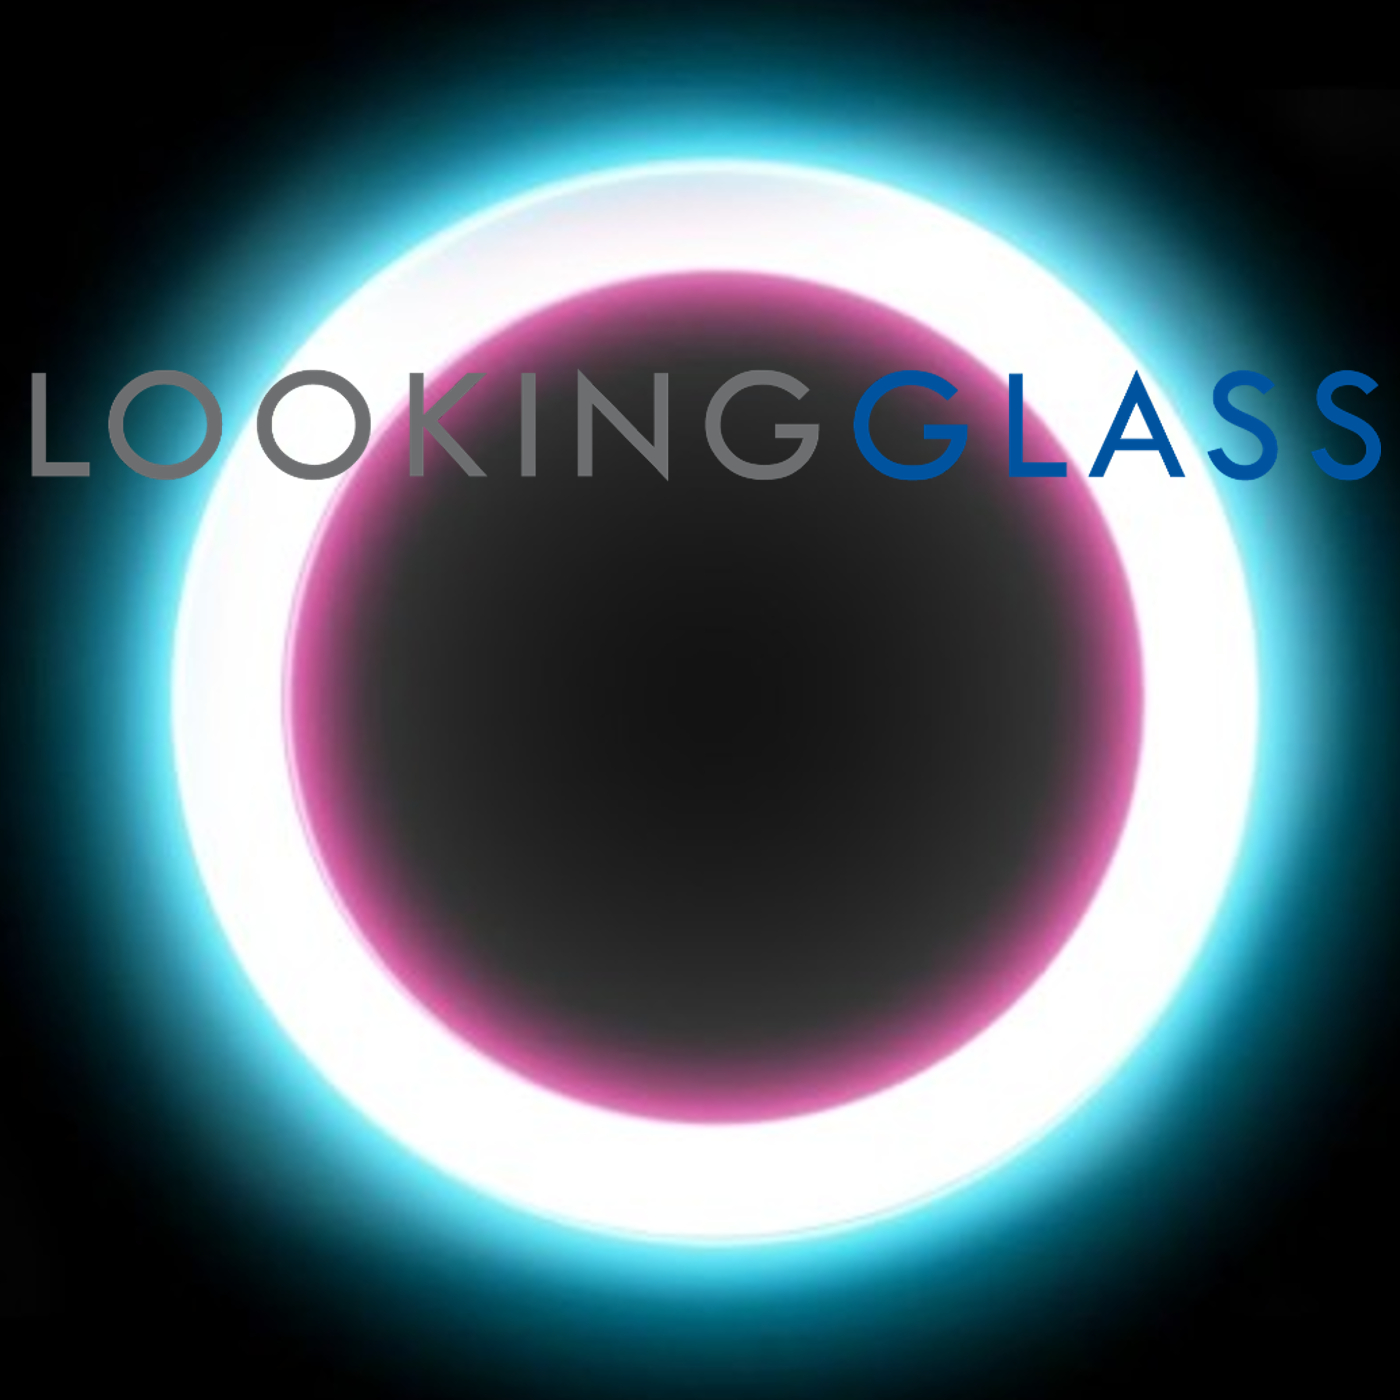 Looking-Glass Forum